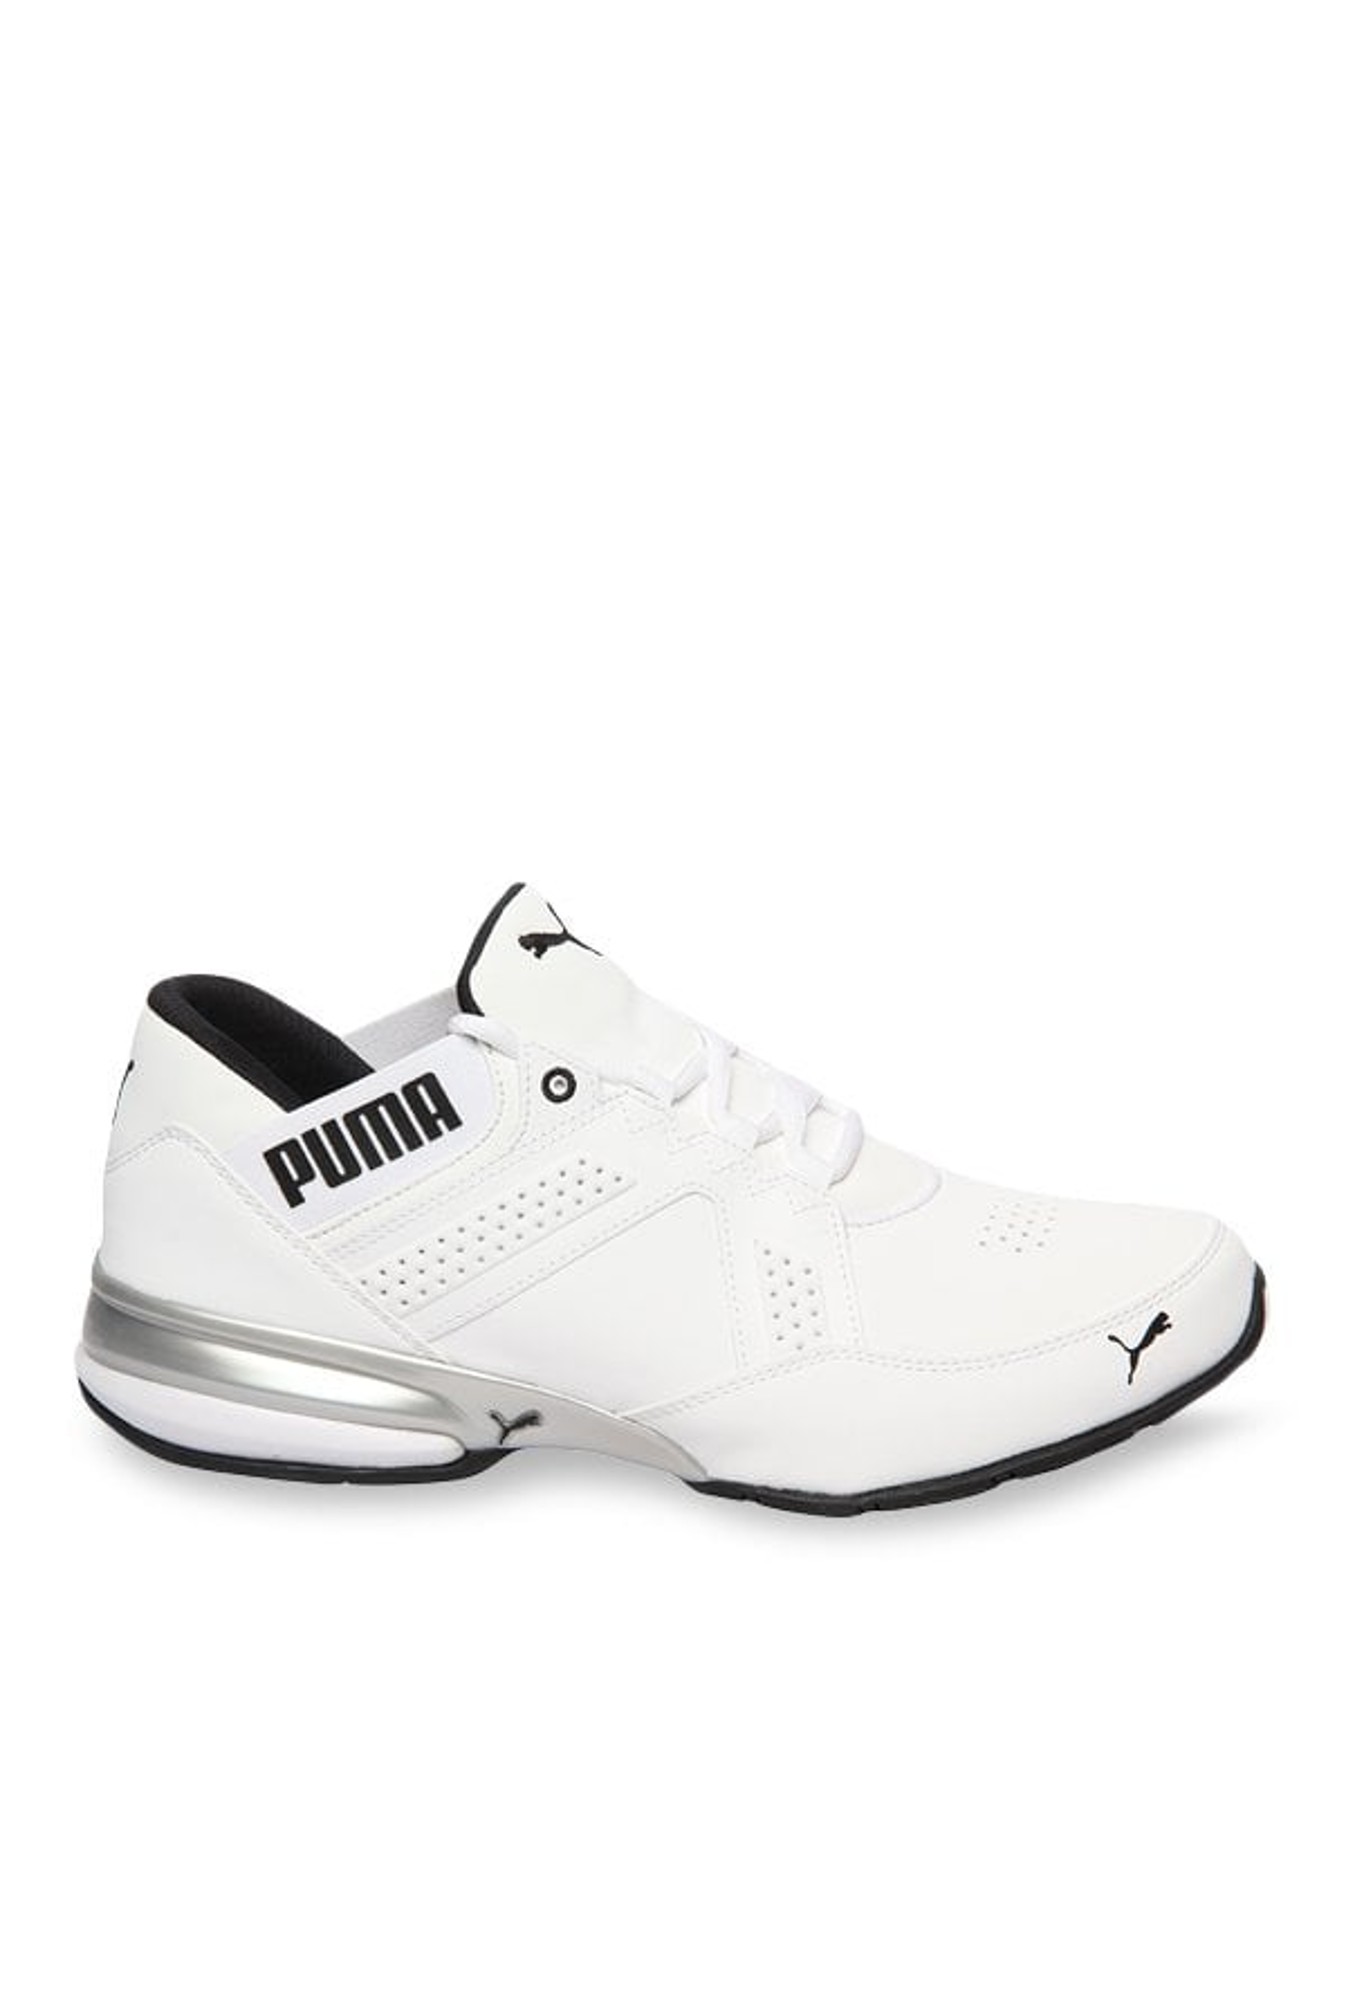 puma enzin white running shoes